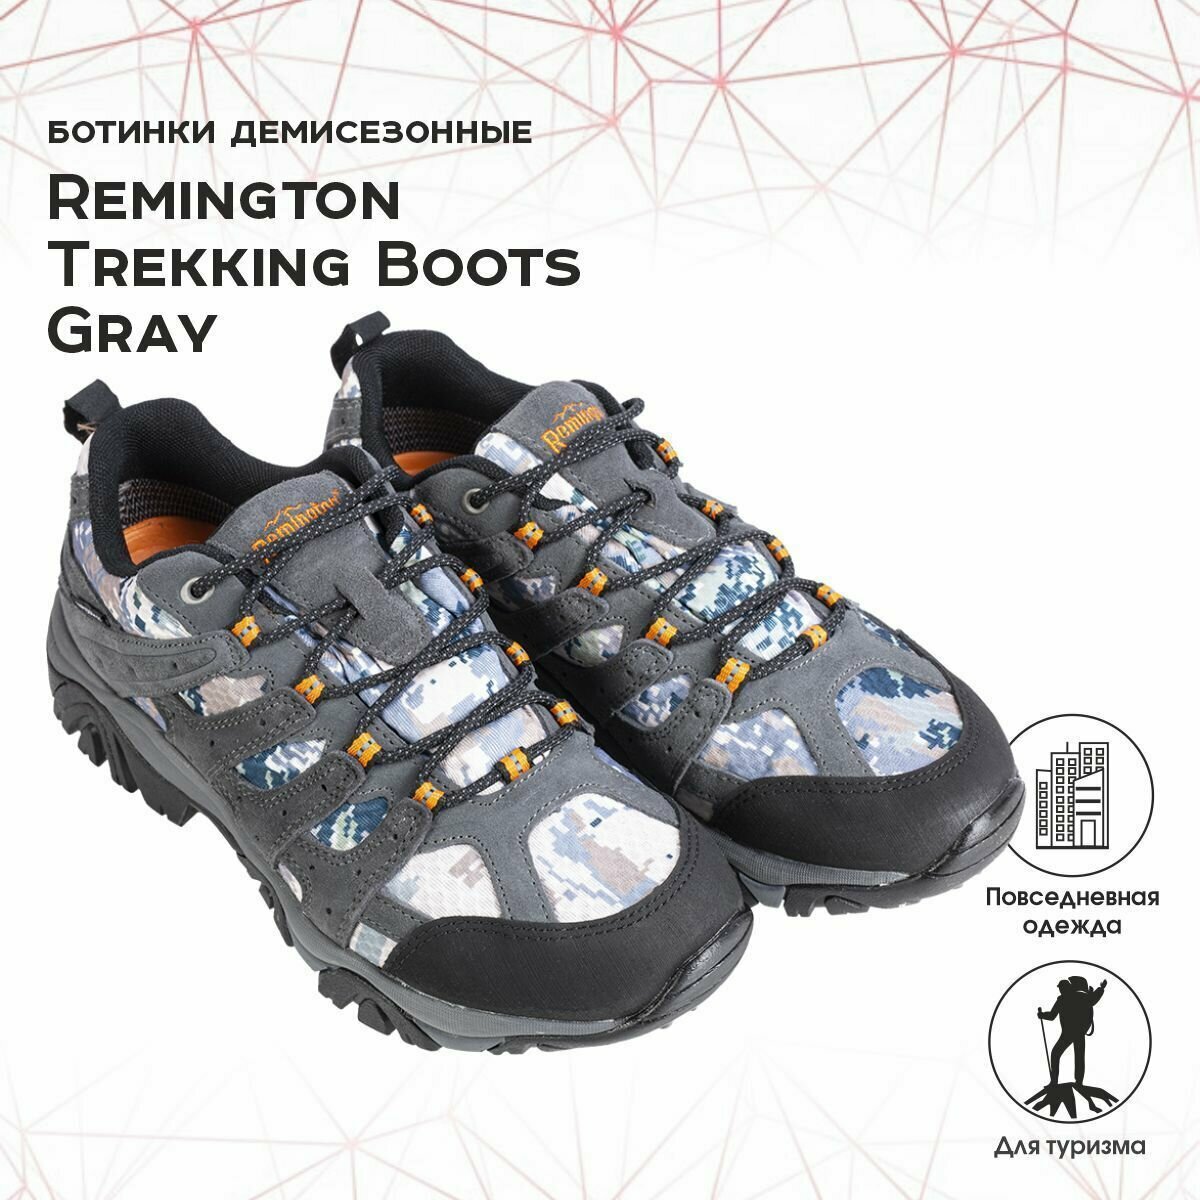 Ботинки Remington Trekking boots gray 47